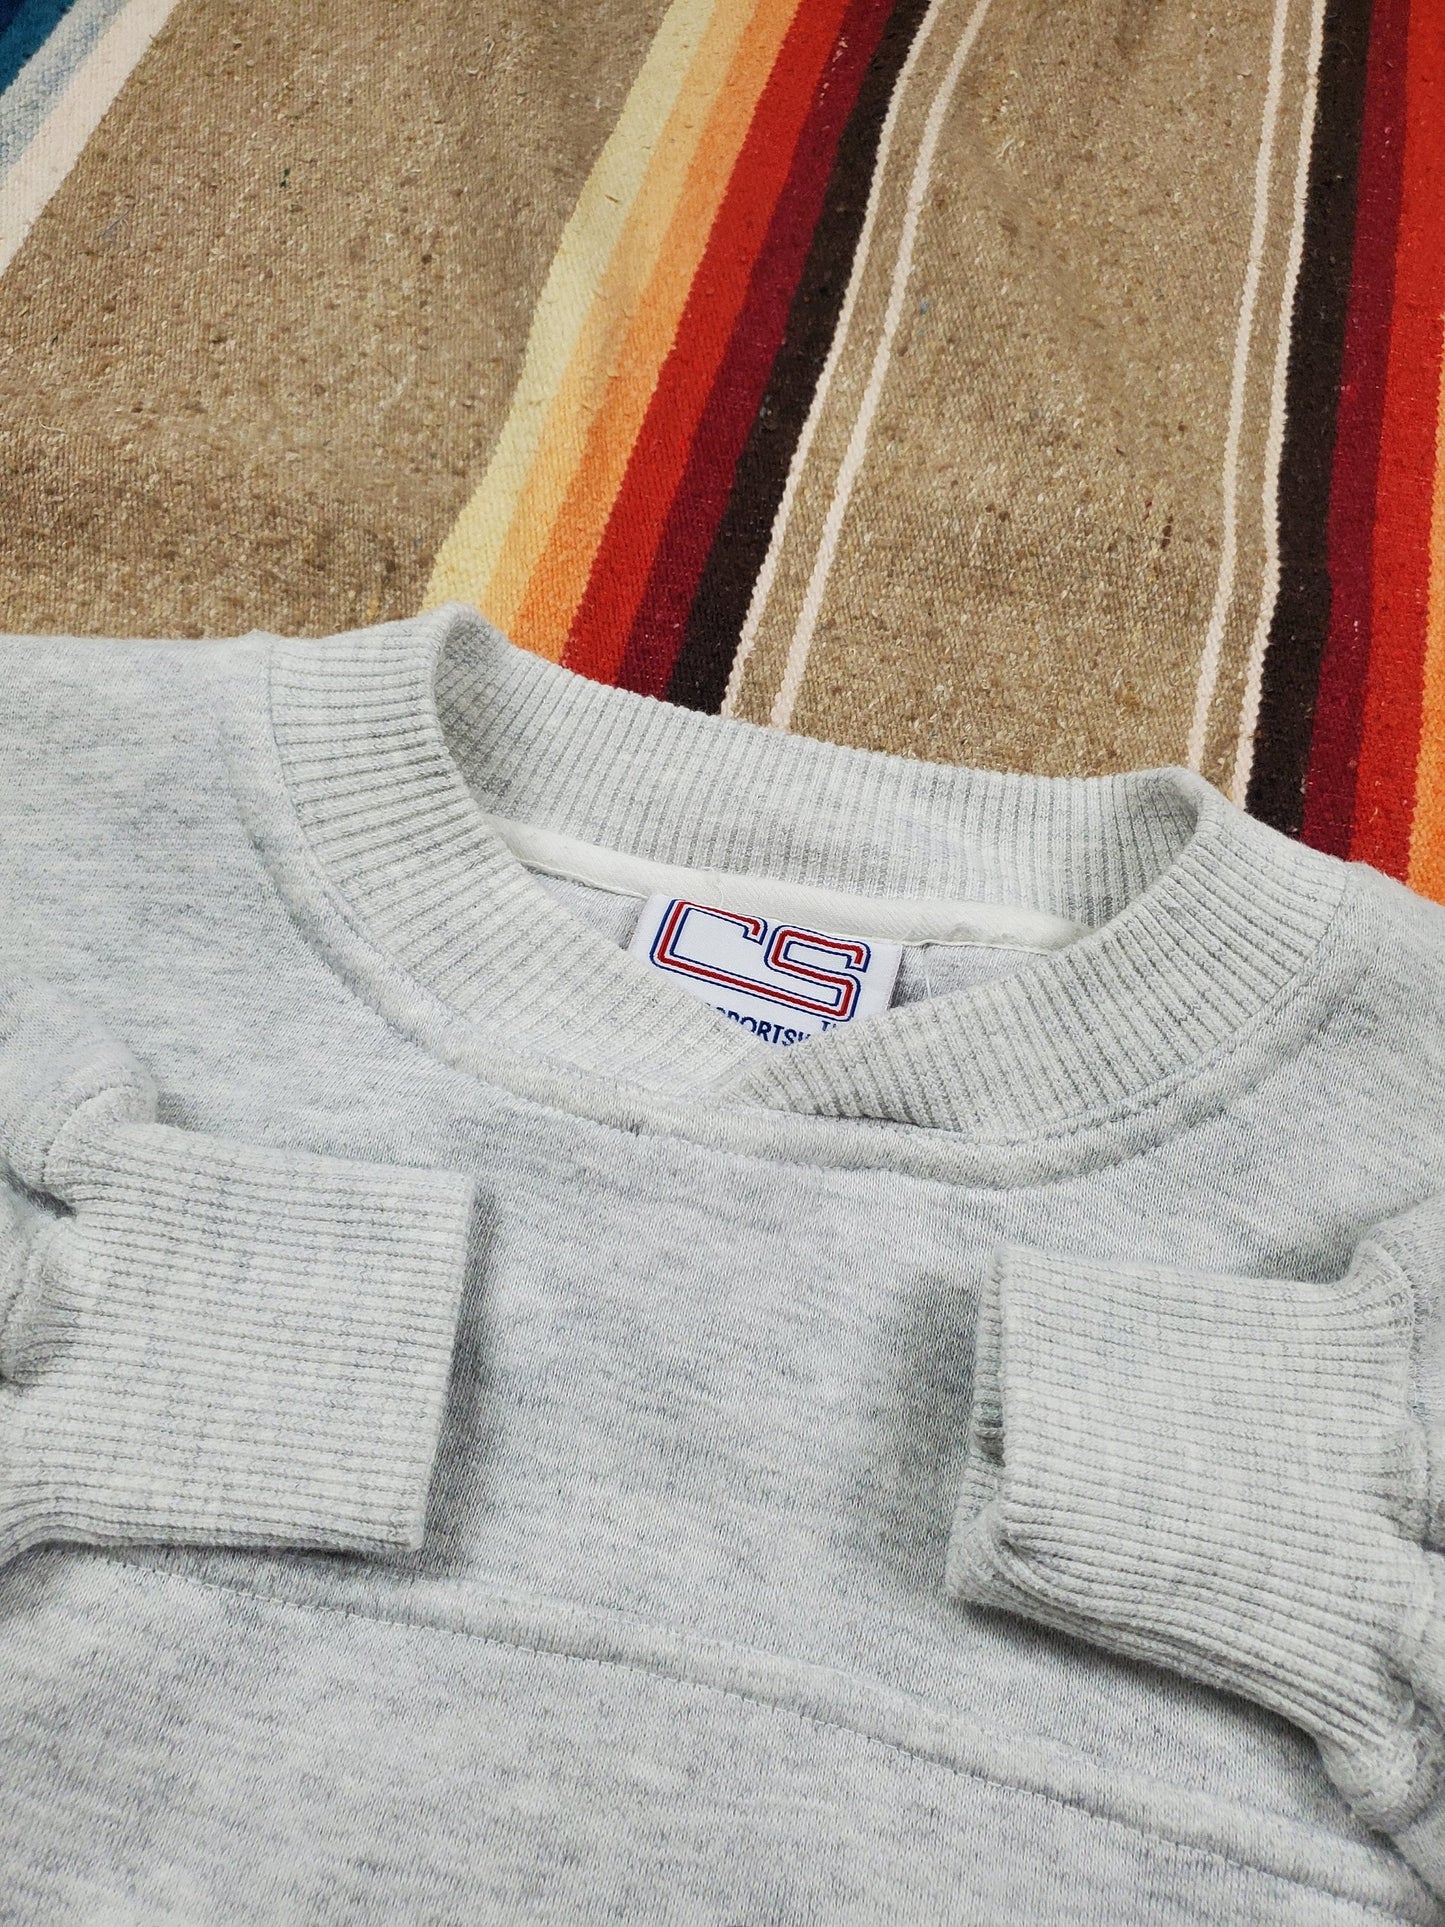 1990s Crable Sportswear Georgetown Hoyas University Sweatshirt Size XL